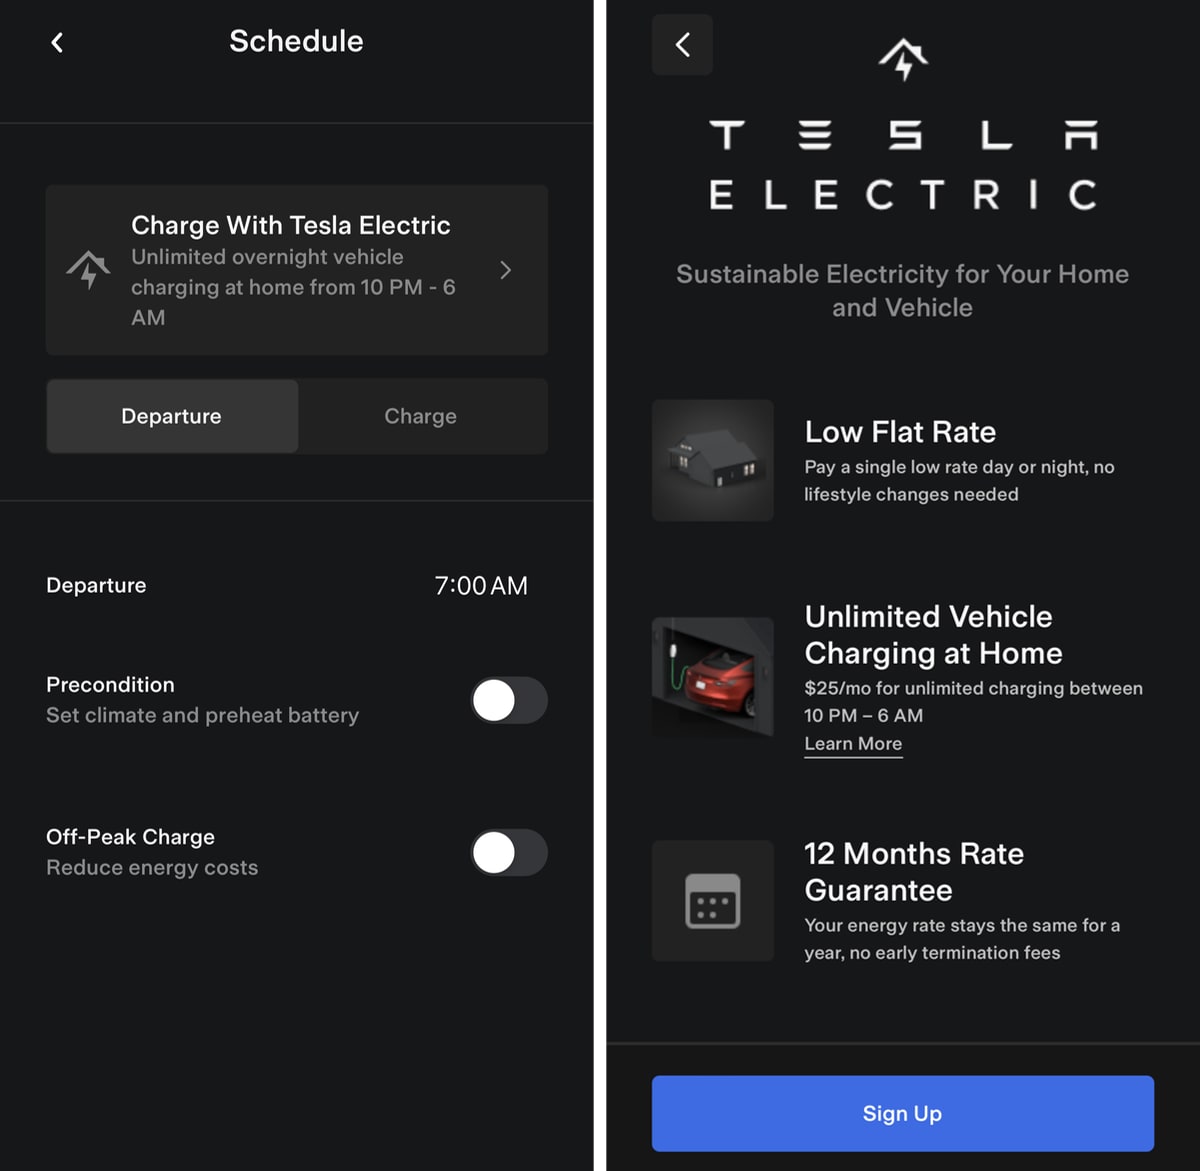 Tesla Tesla Electric feature in update 4.23.5